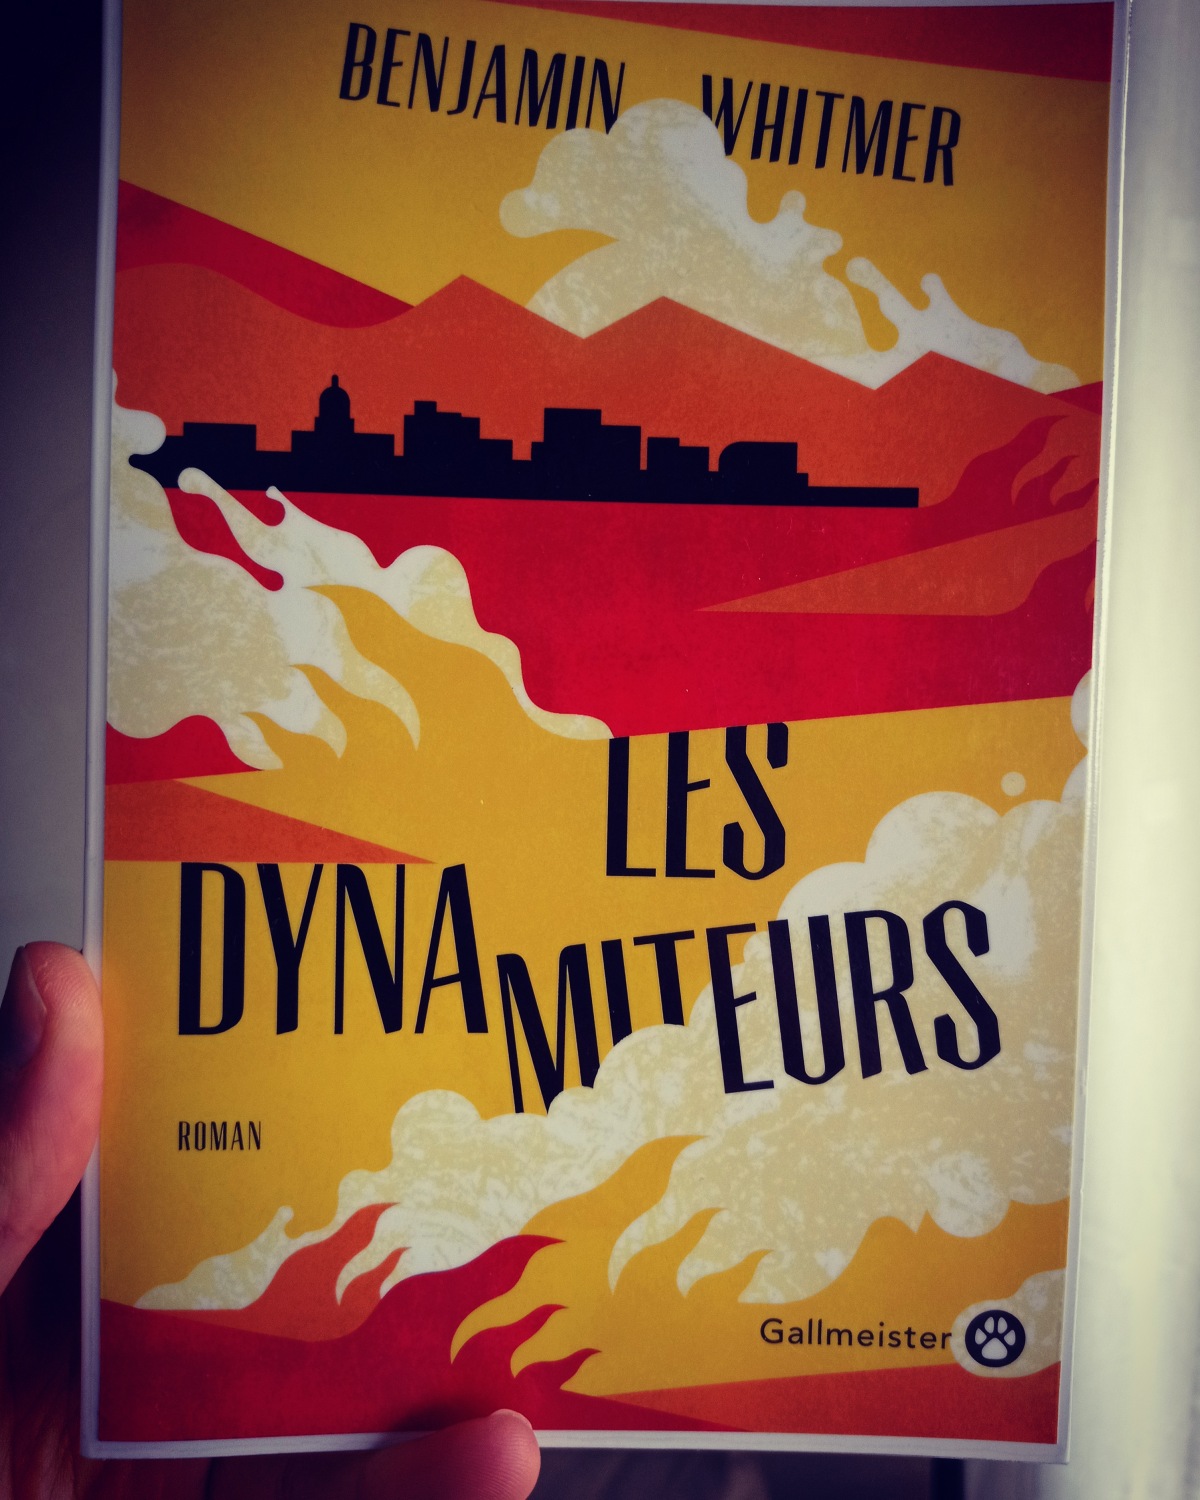 Les Dynamiteurs / Benjamin Whitmer